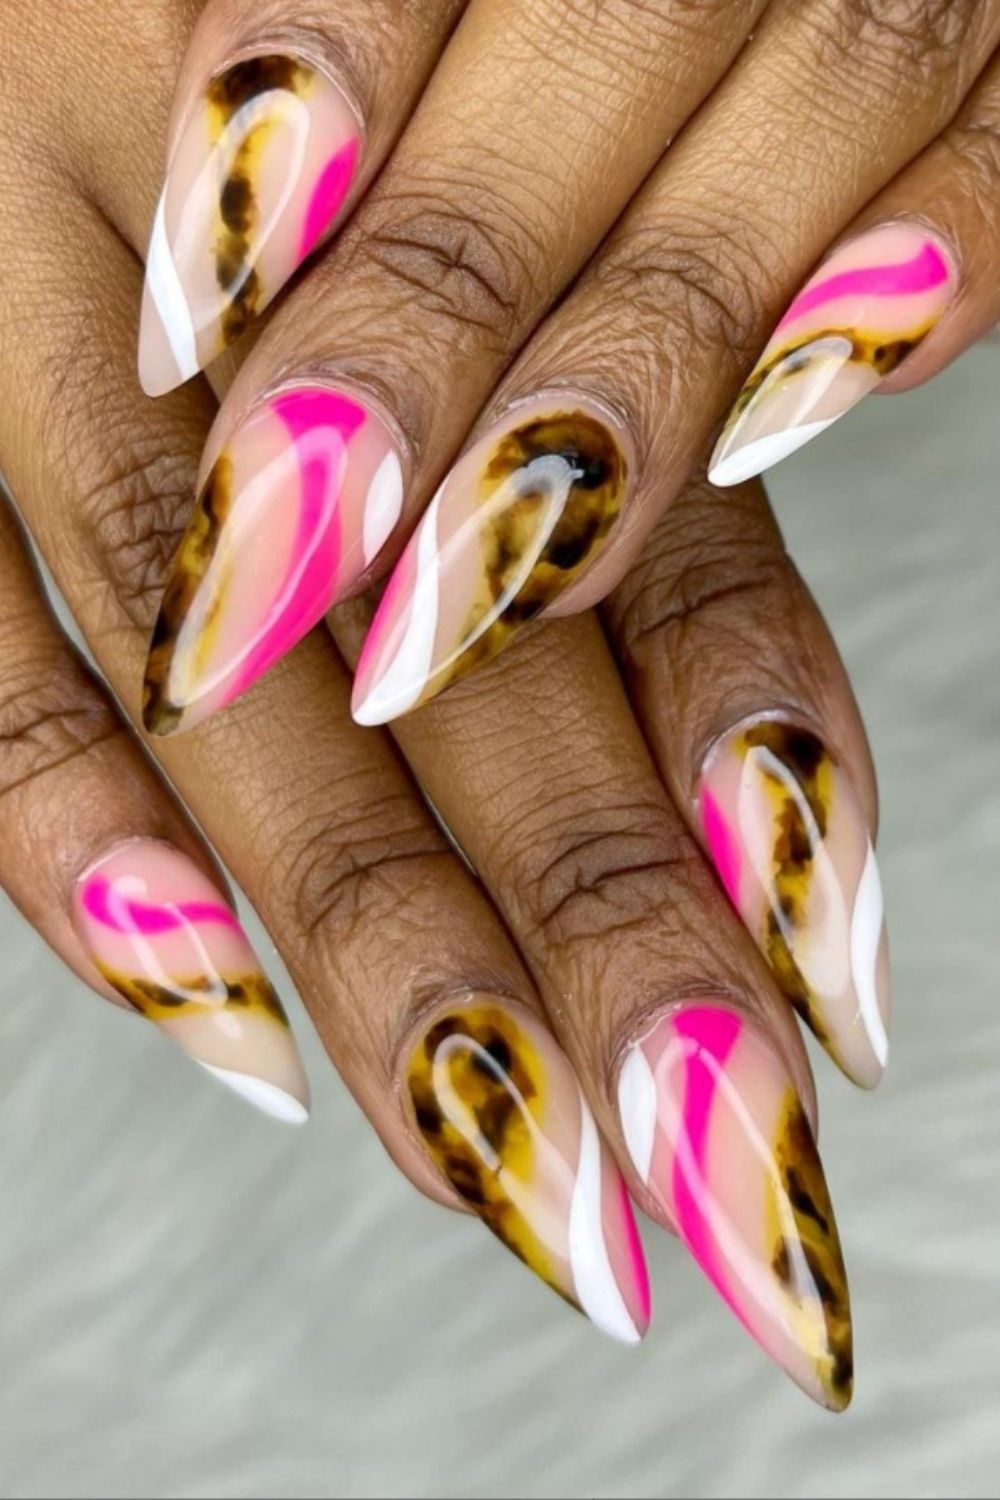 Almond nails art